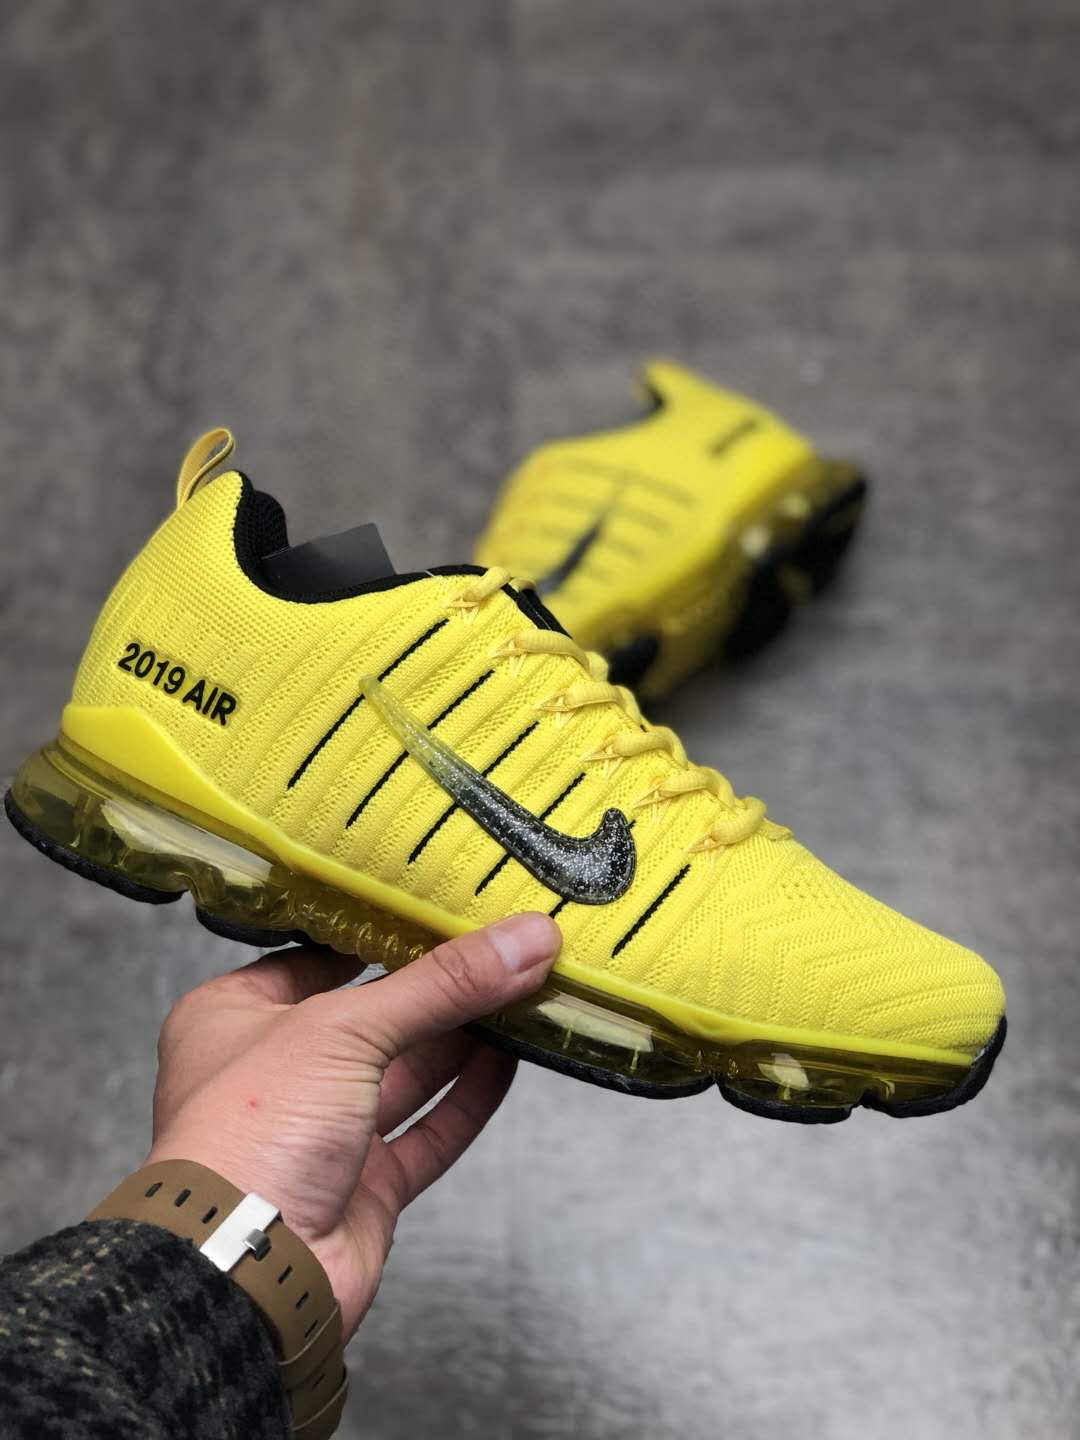 Nike Air Ferrari I 2019 Yellow Black Shoes